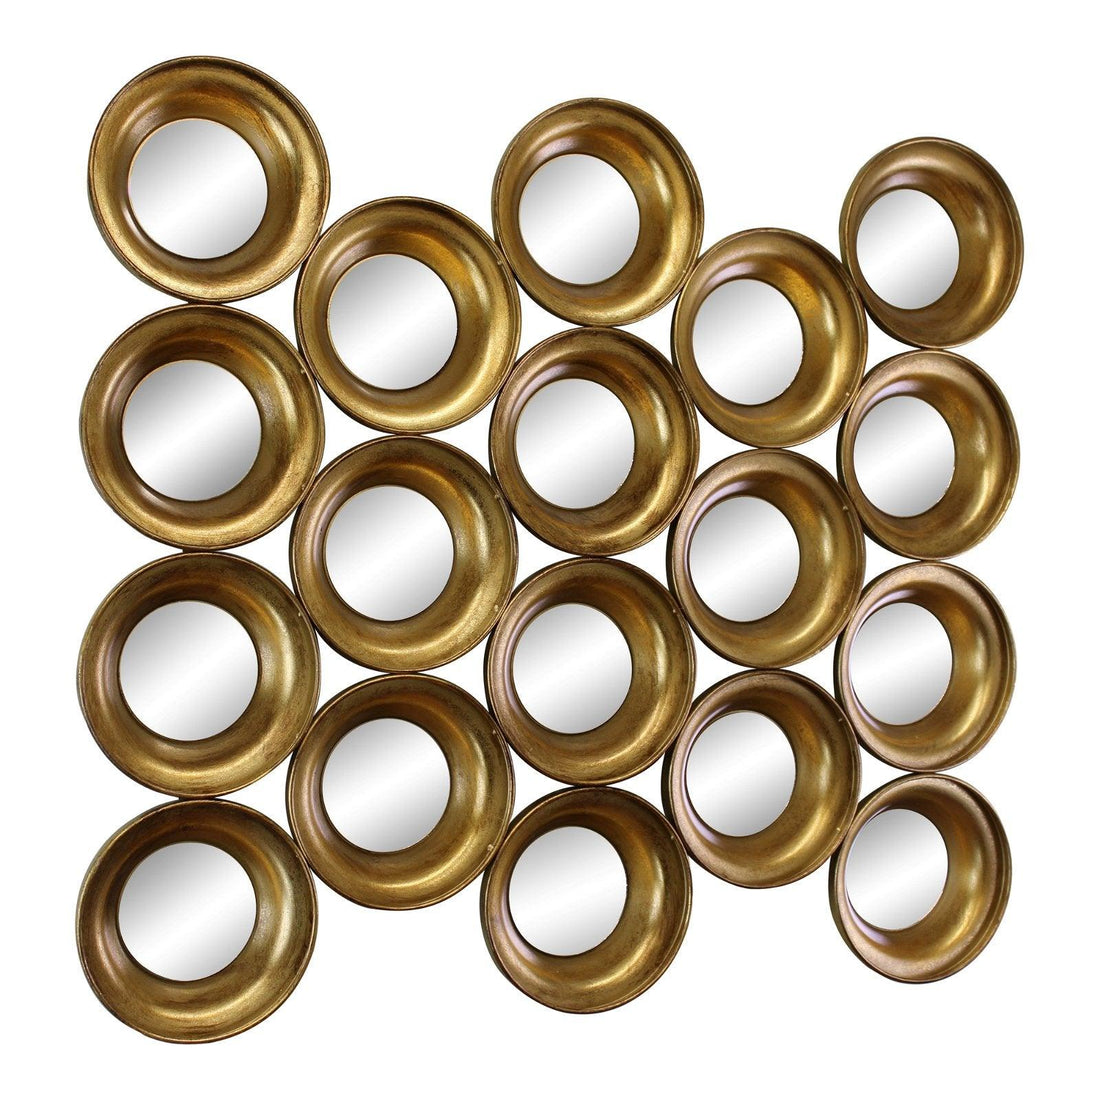 Gold Metal Multi Circle Wall Mirror 76cm. - £176.99 - Mirrors 